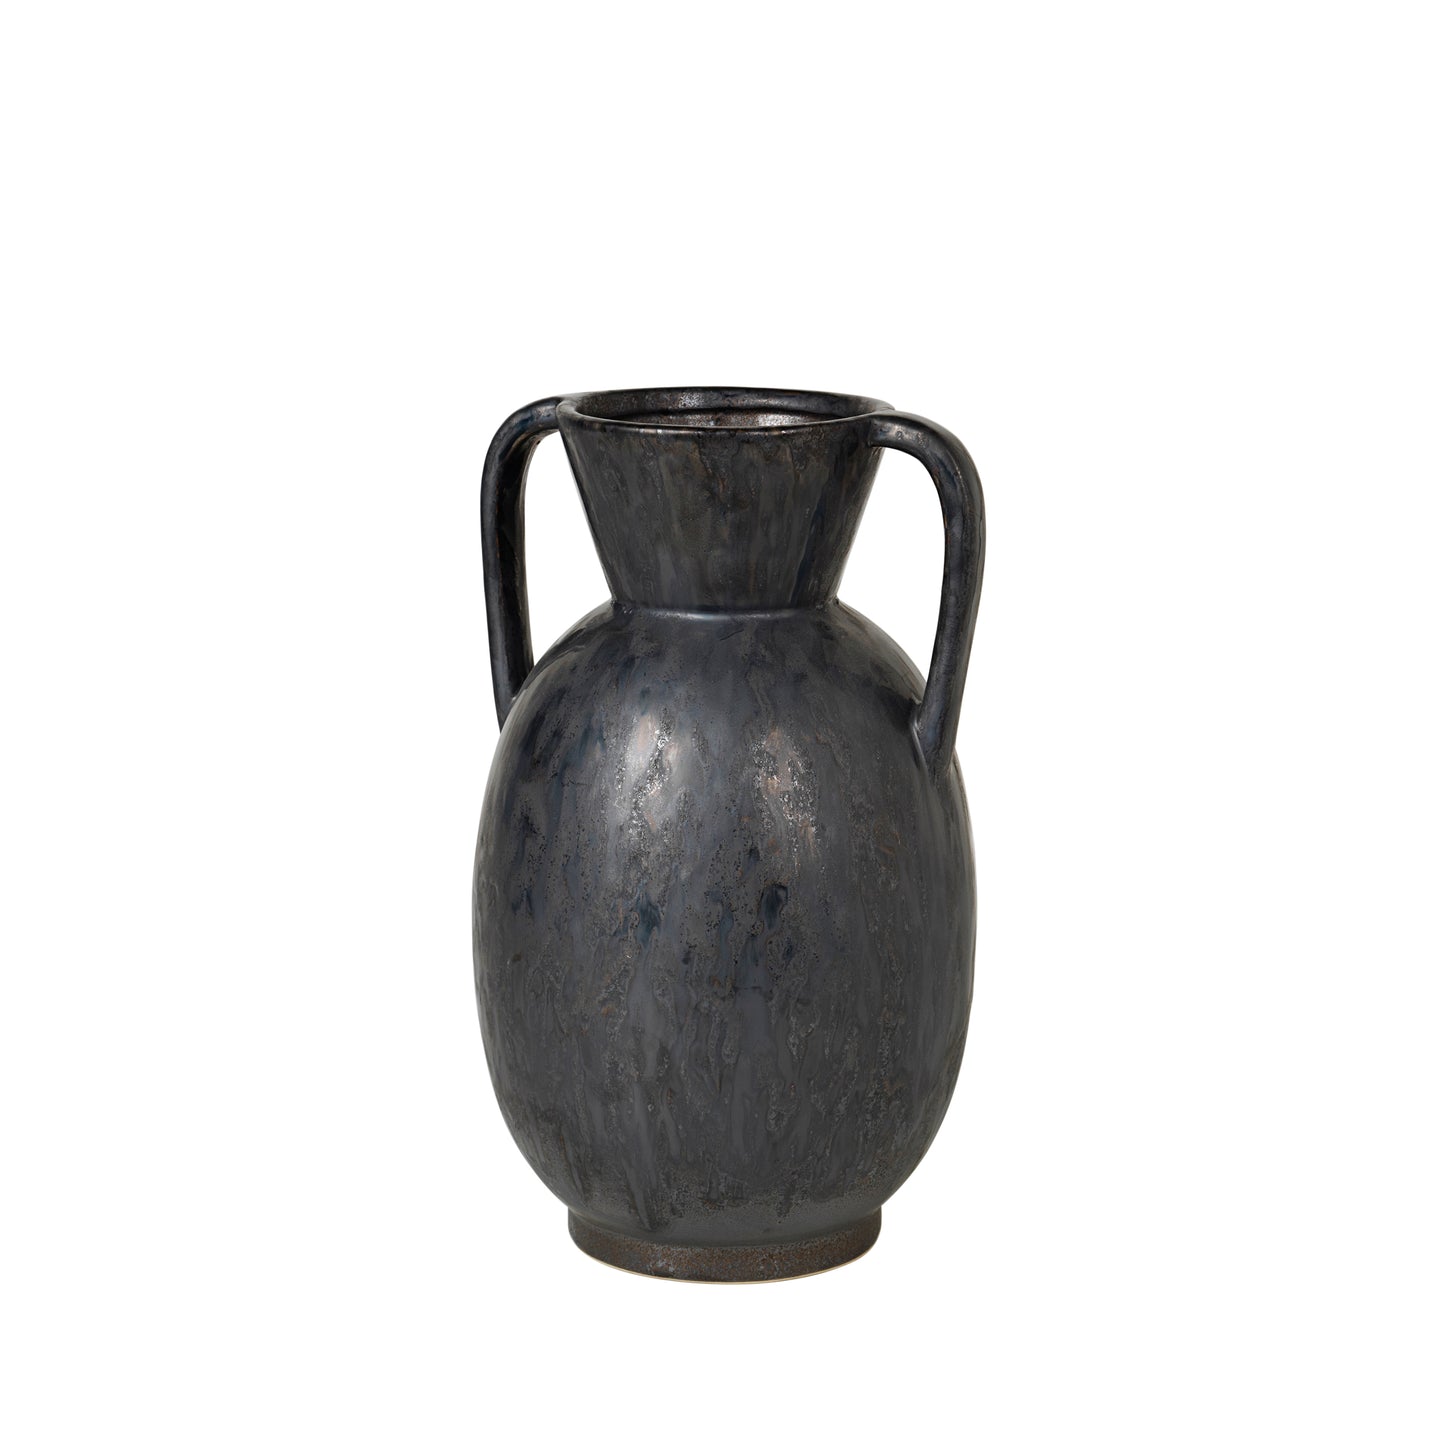 Simi Ceramic Vase